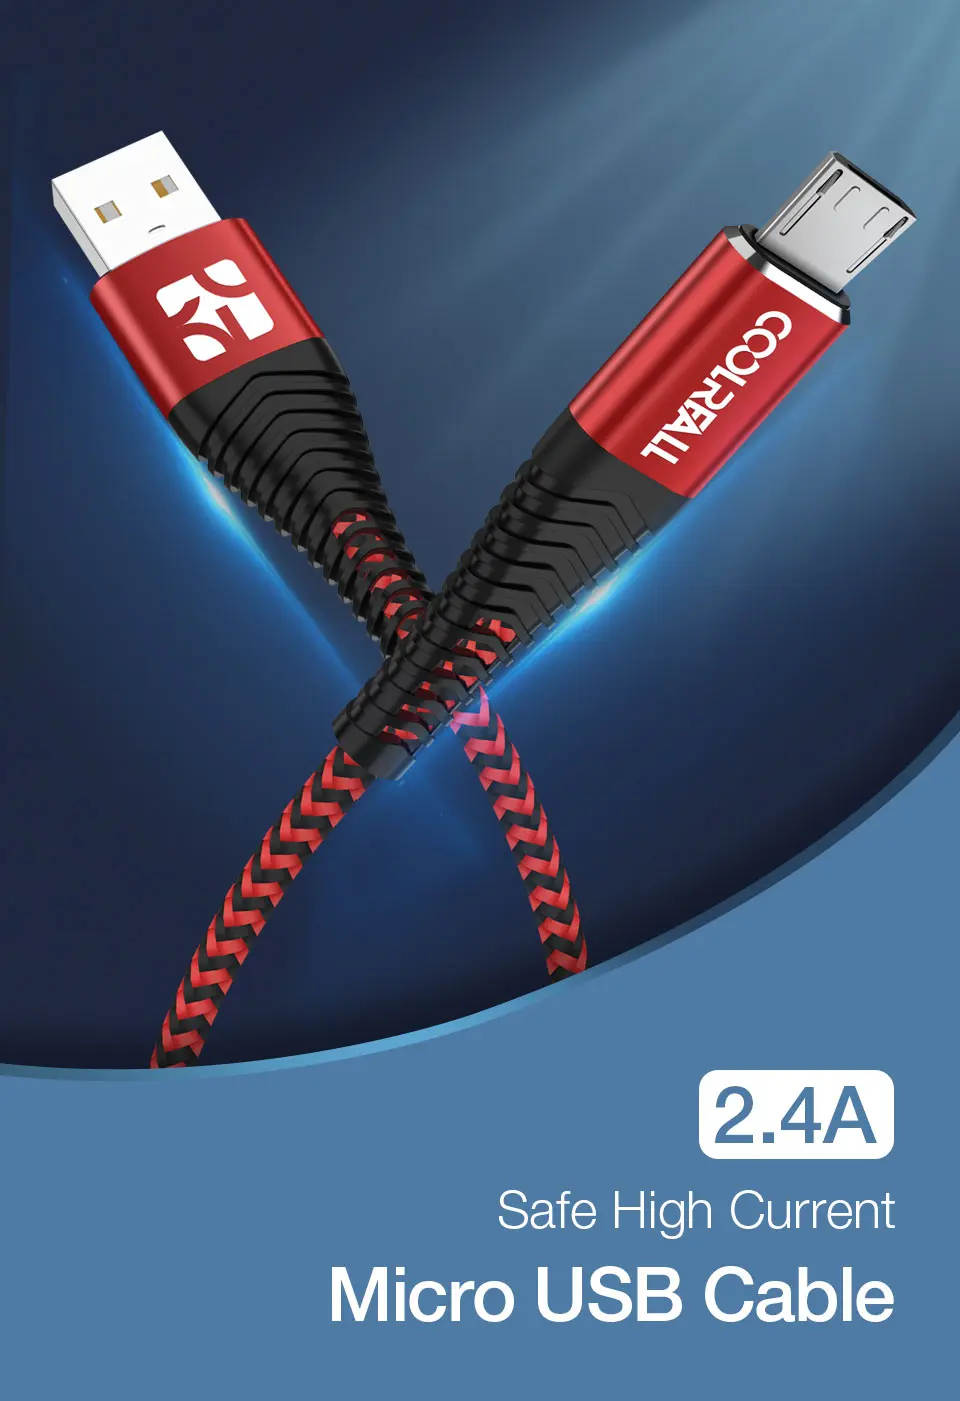 Coolreall 2.4A Micro USB кабель для быстрой зарядки USB кабель для передачи данных нейлоновый шнур синхронизации для samsung huawei Xiaomi LG Andriod Micro usb кабели